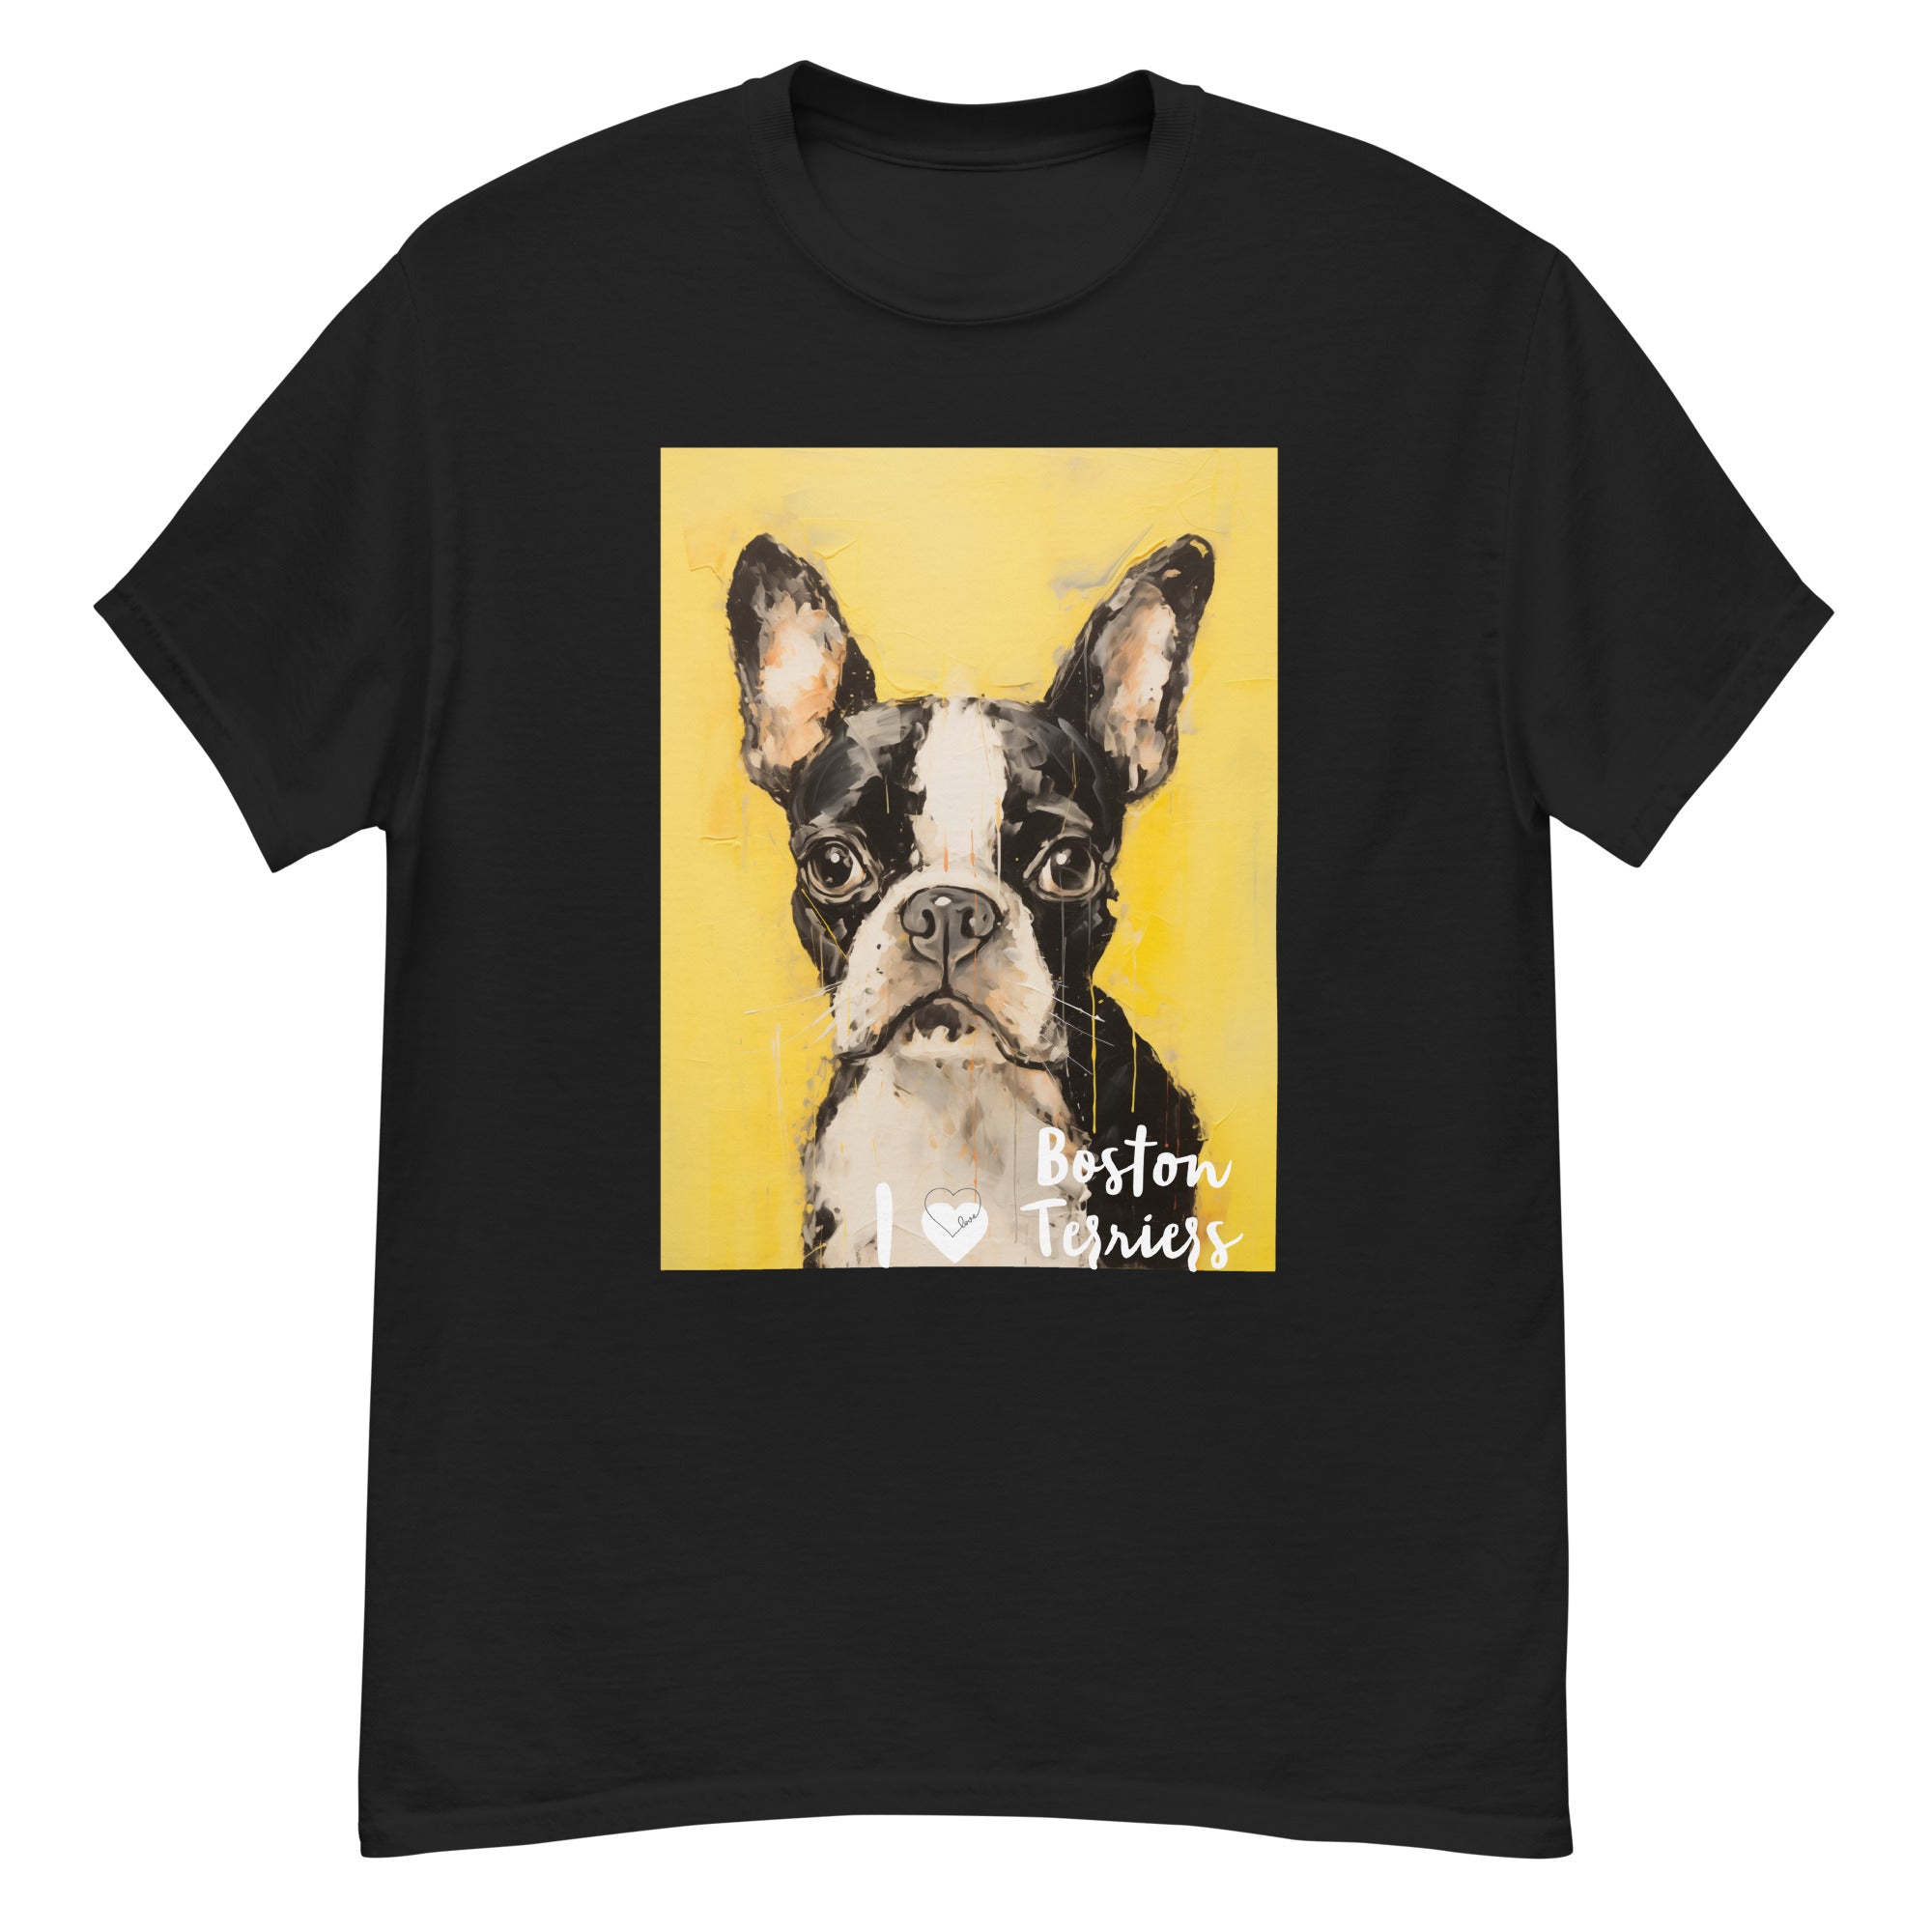 Men's classic tee - I ❤ DOGS - Boston Terrier